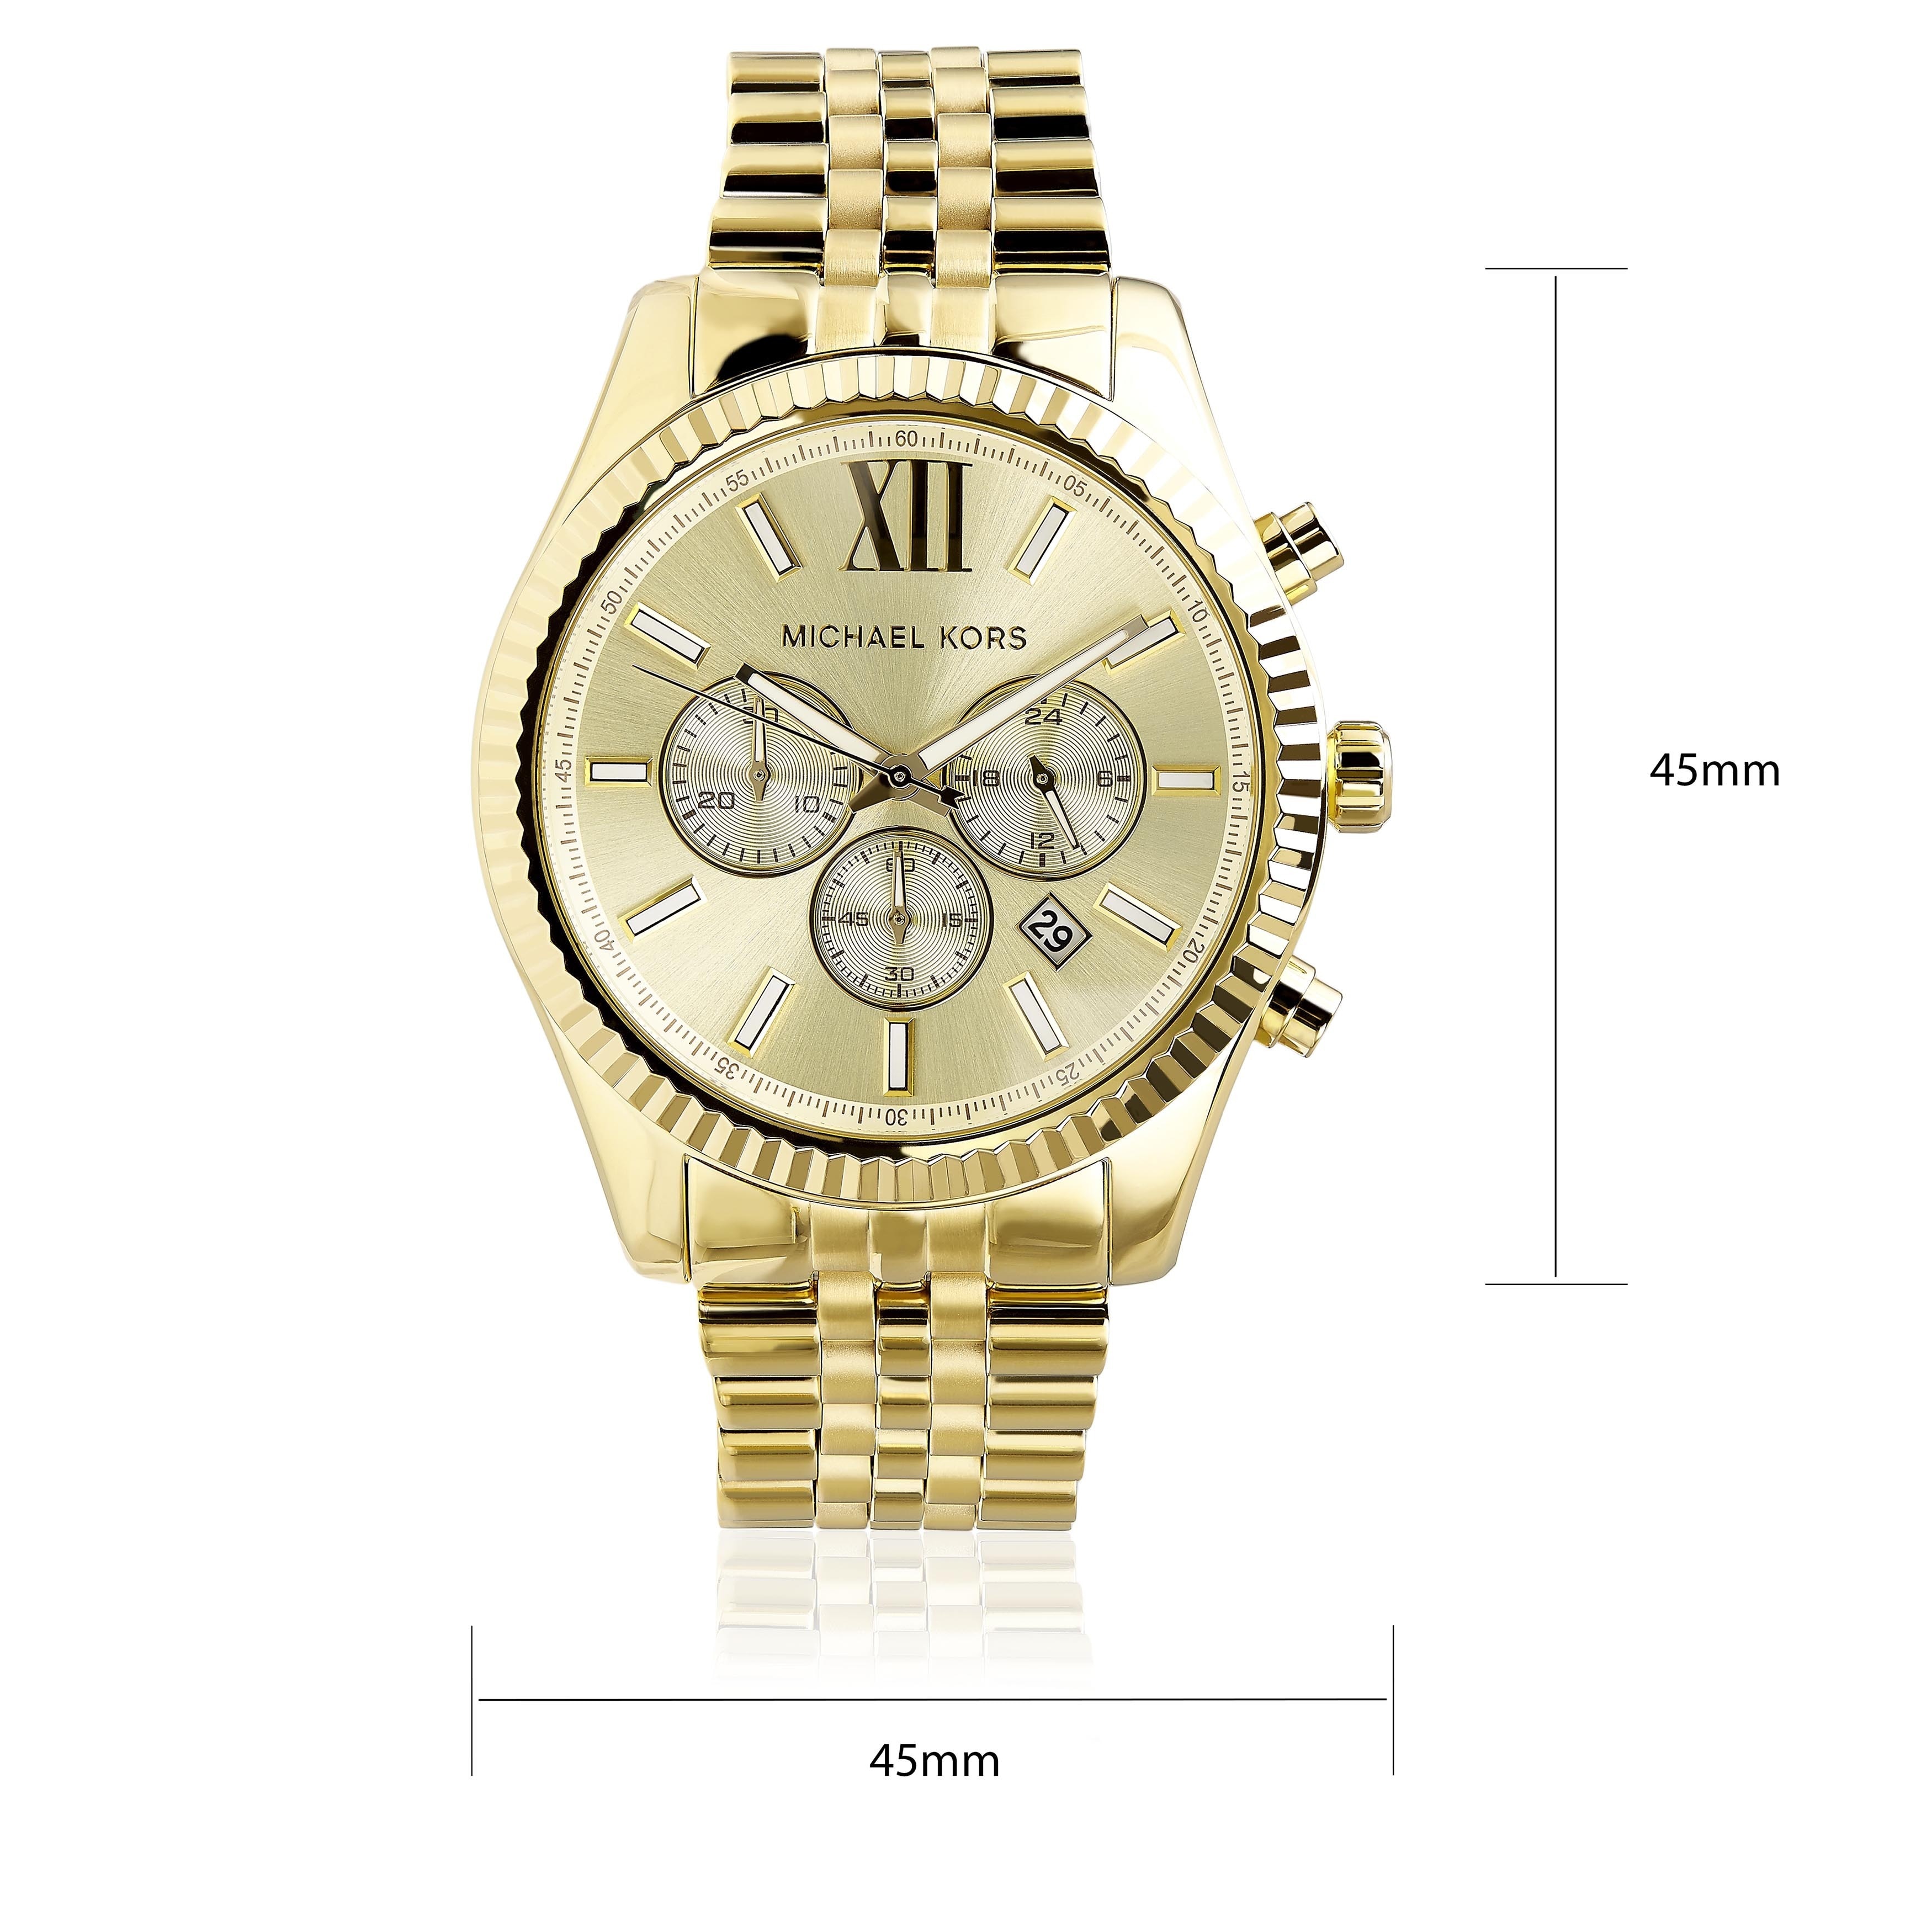 Forfølge dominere mentalitet Michael Kors Men's MK8281 Gold-Tone Fluted Bezel Chronograph Watch - Gold -  Overstock - 7883598